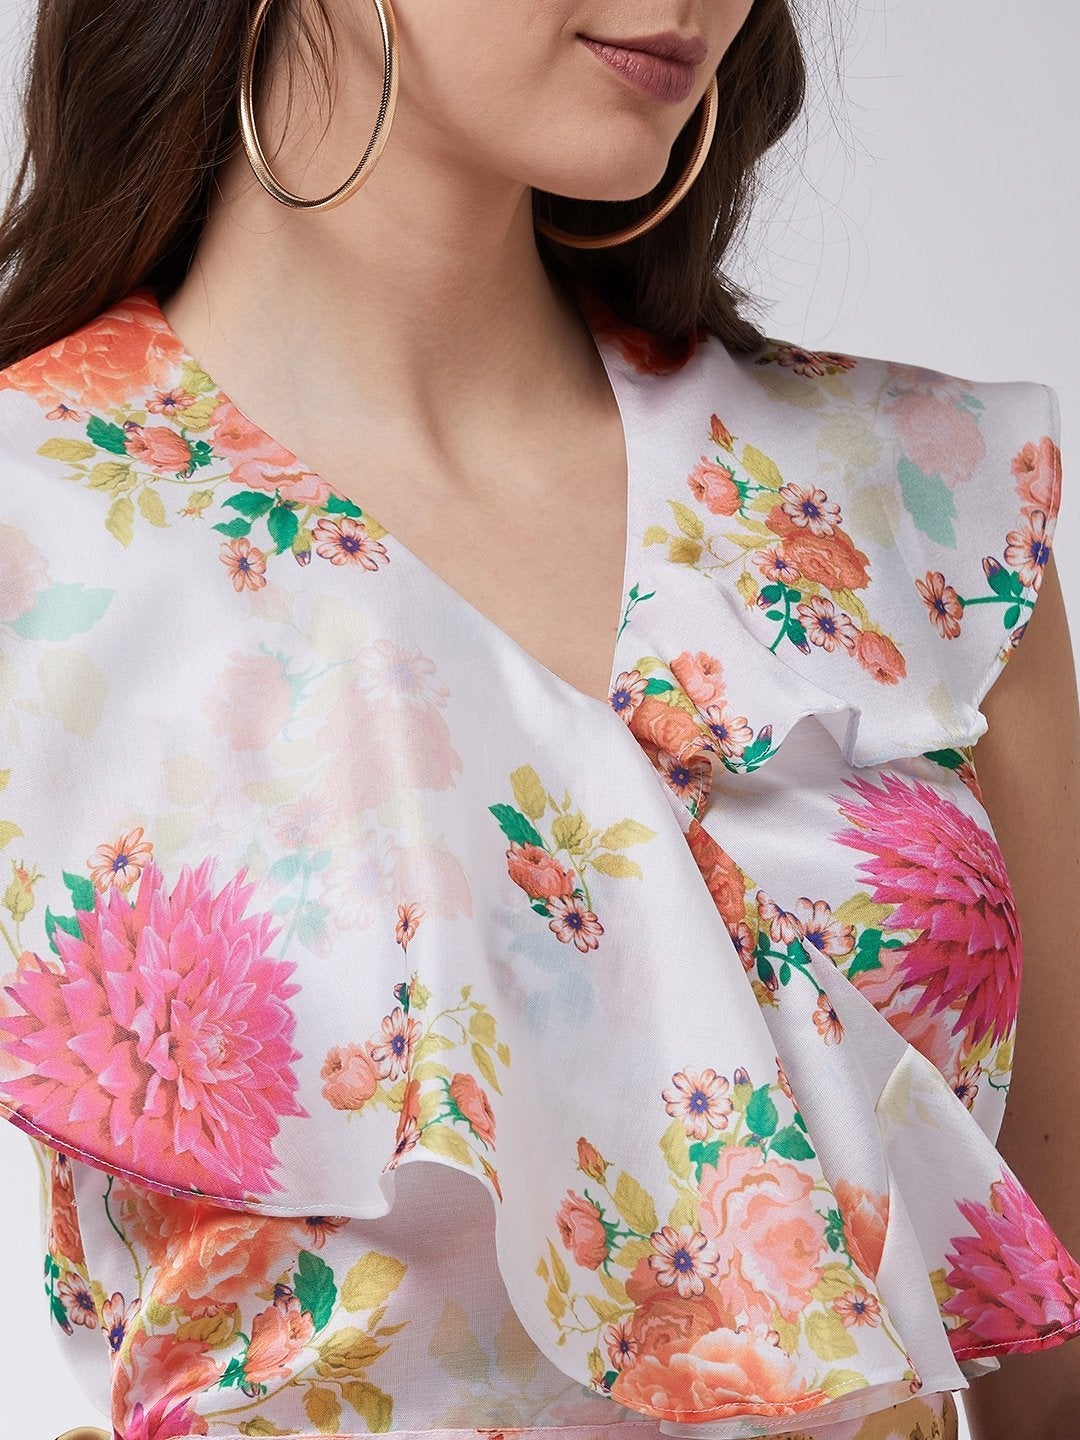 Women's Candy Inspired Digital Printed Sleeveless Ruffle Top - Pannkh